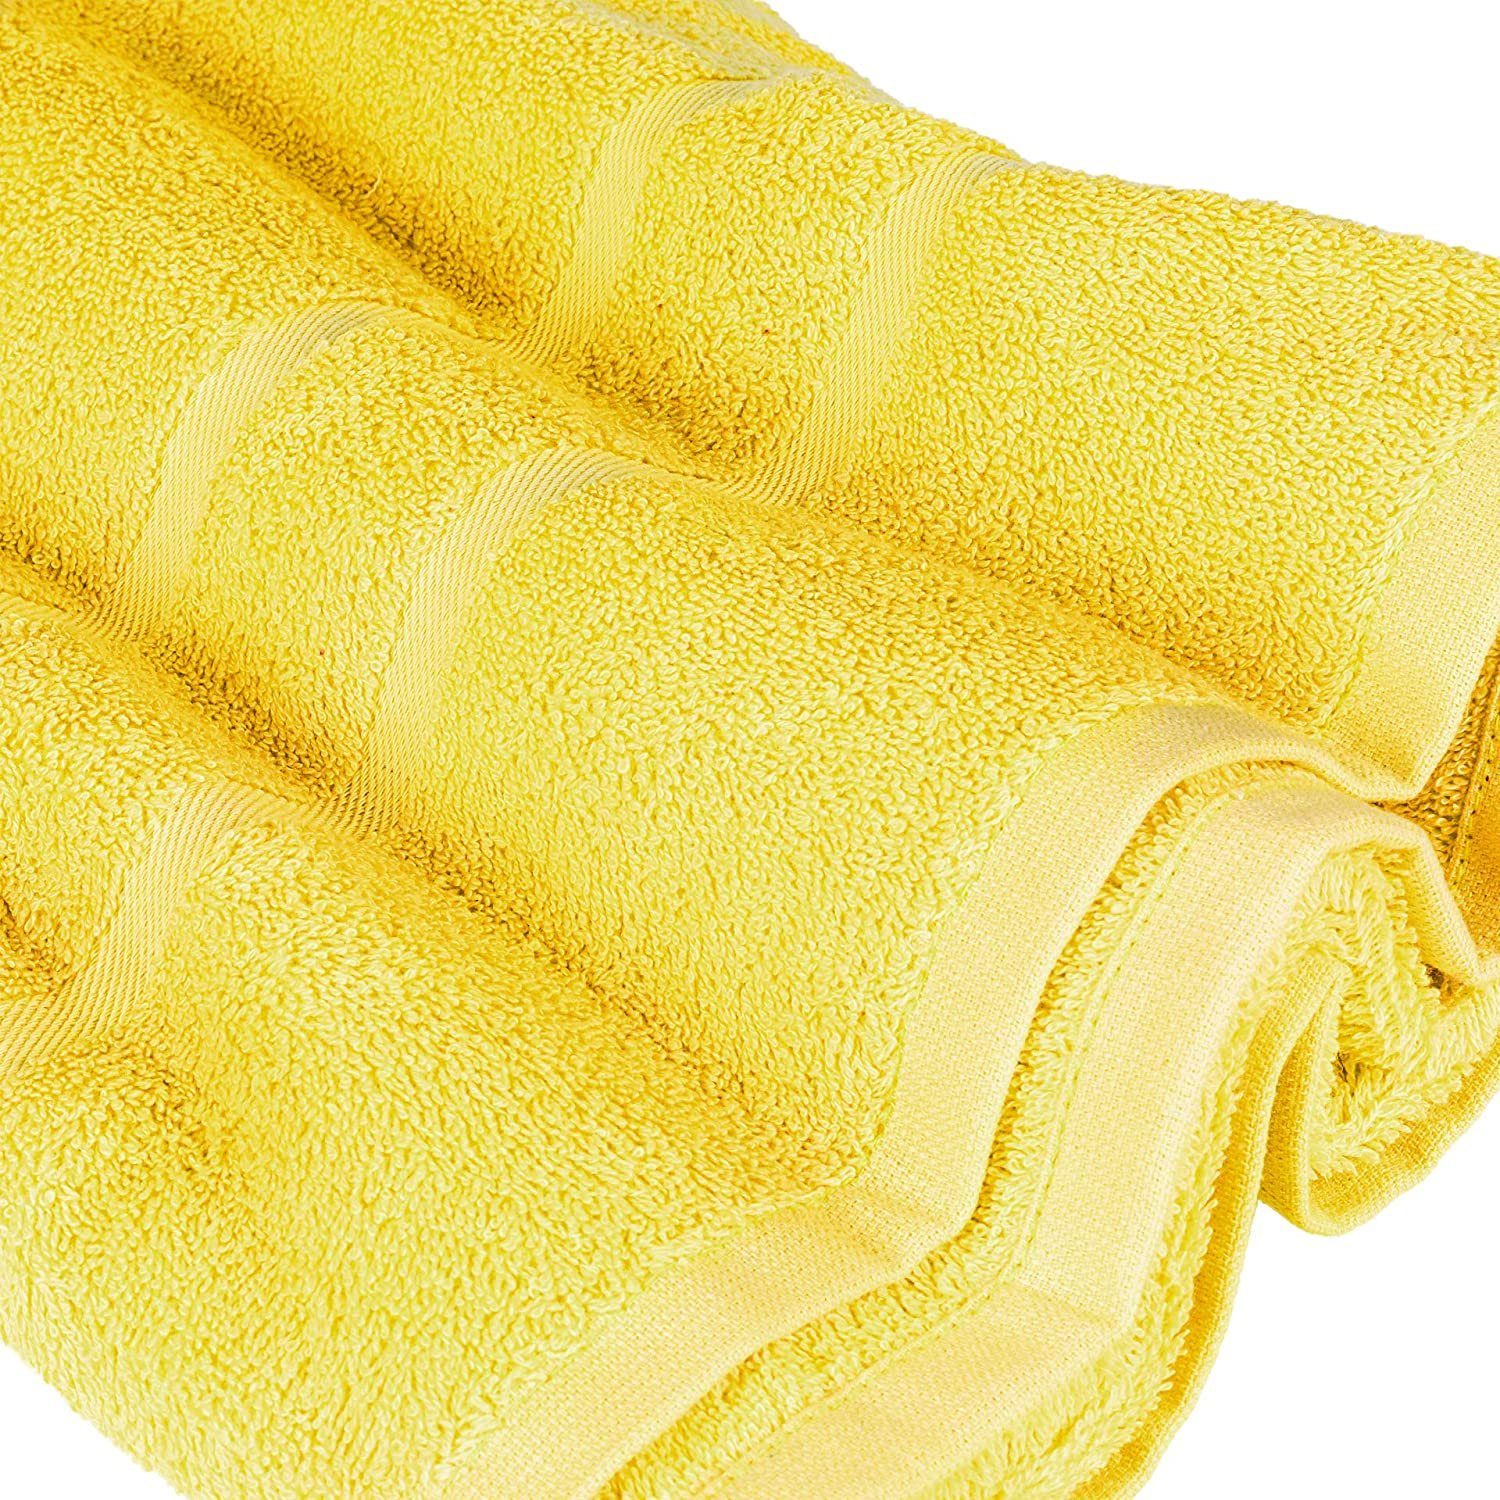 StickandShine Handtücher Saunatücher GSM 500 Handtuch 100% Baumwolle zur Gelb in Wahl Duschtücher Badetücher Gästehandtücher